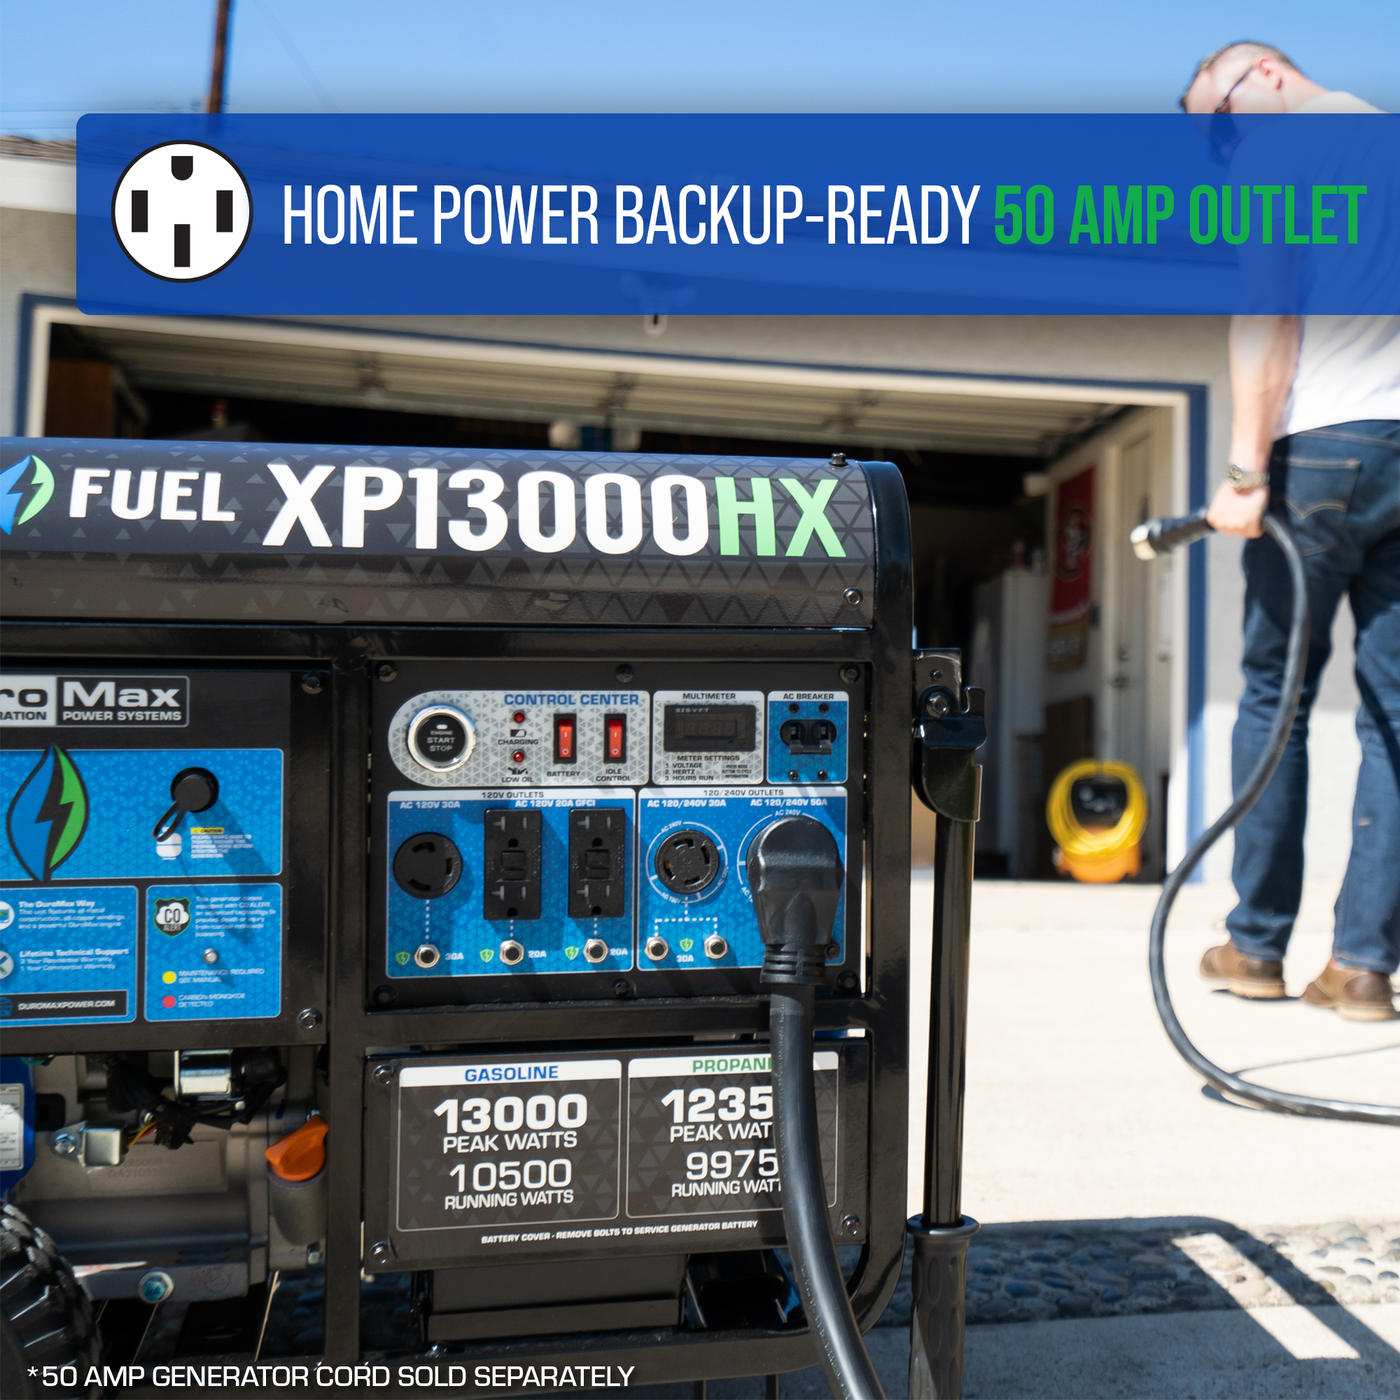 DuroMax  13,000 Watt Dual Fuel Portable HX Generator w/ CO Alert